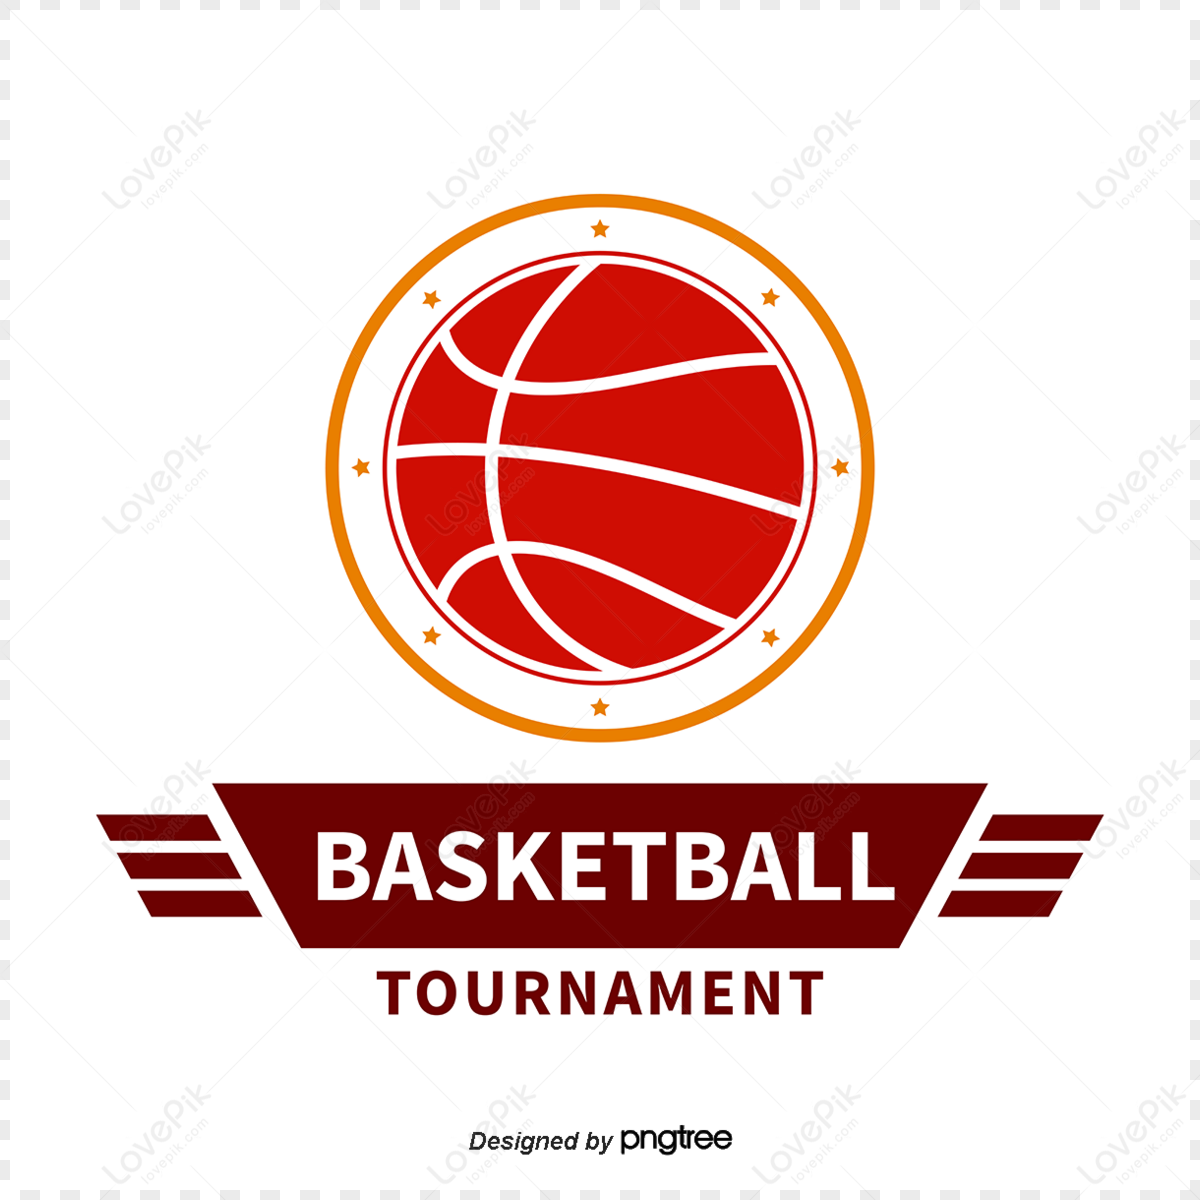 Championship Logo PNG Transparent Images Free Download